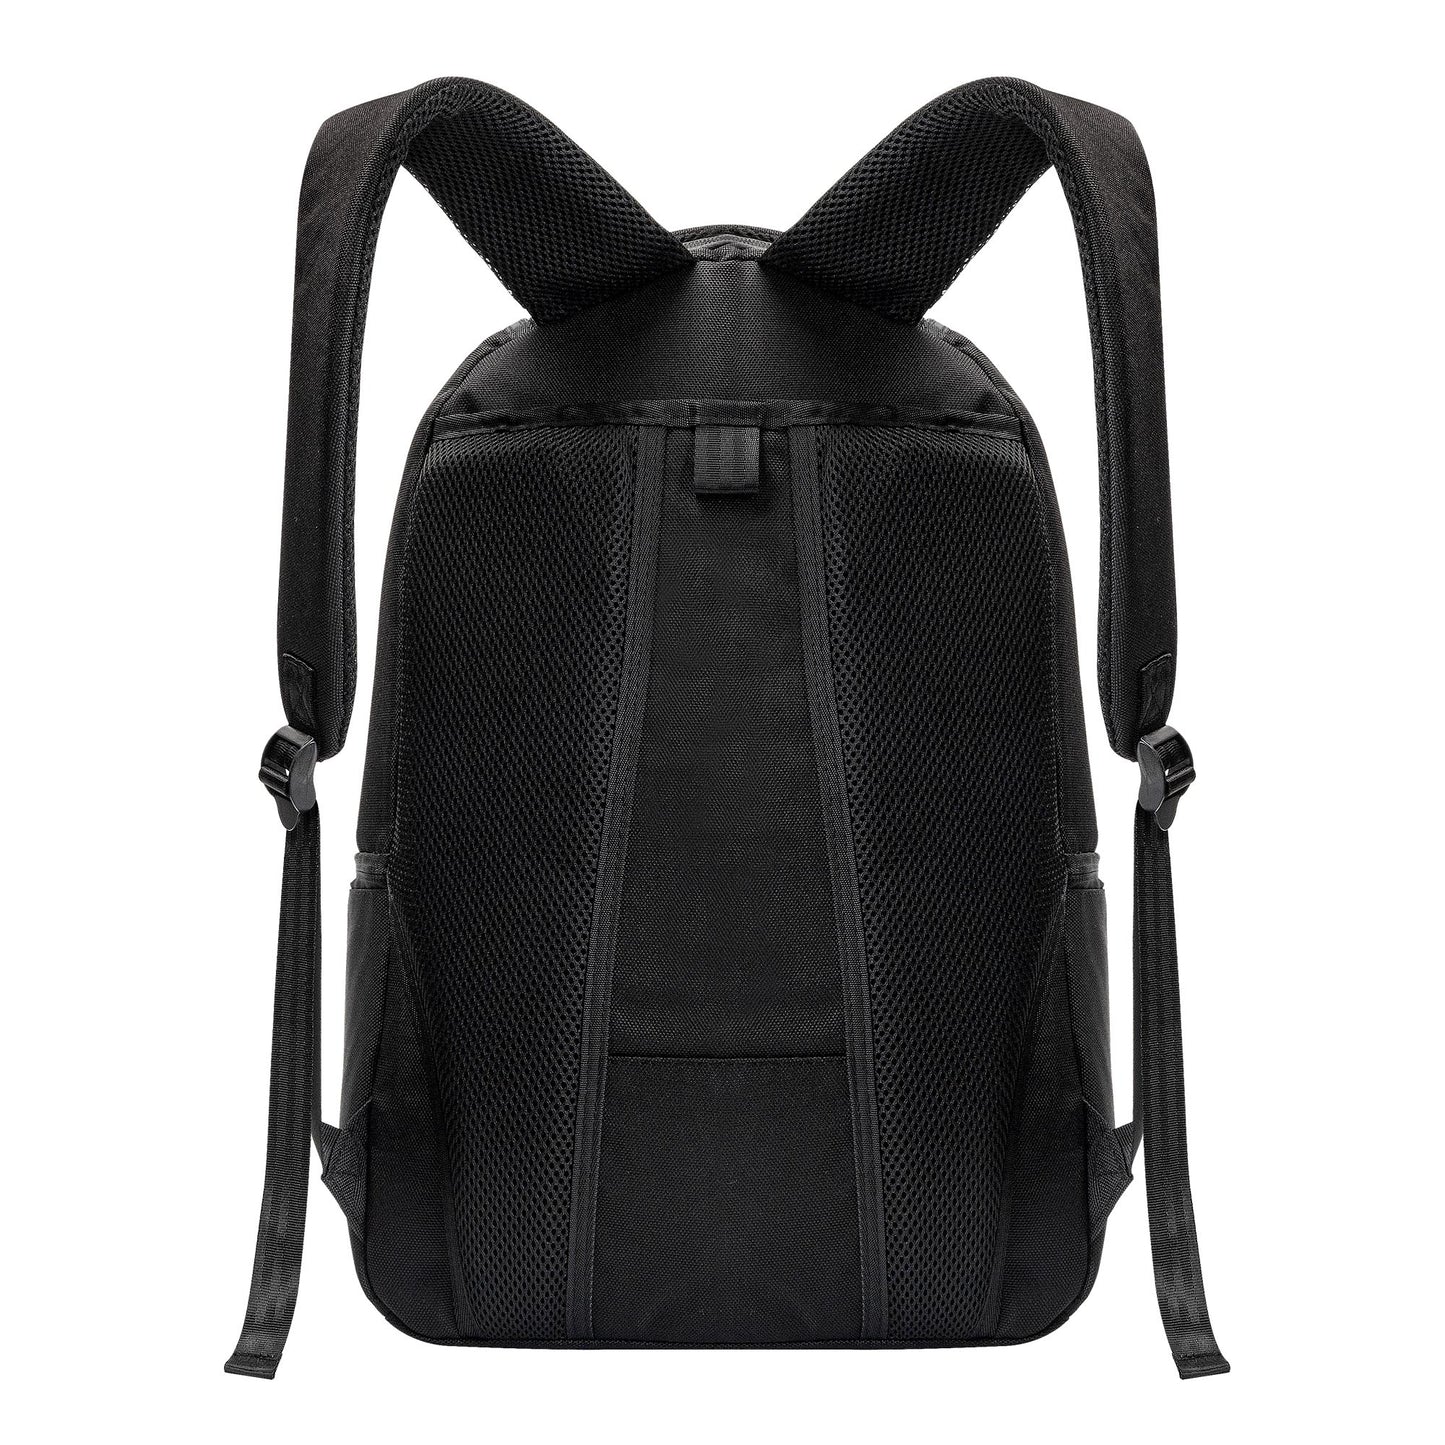 Drip Headz Dripesha (backpack)